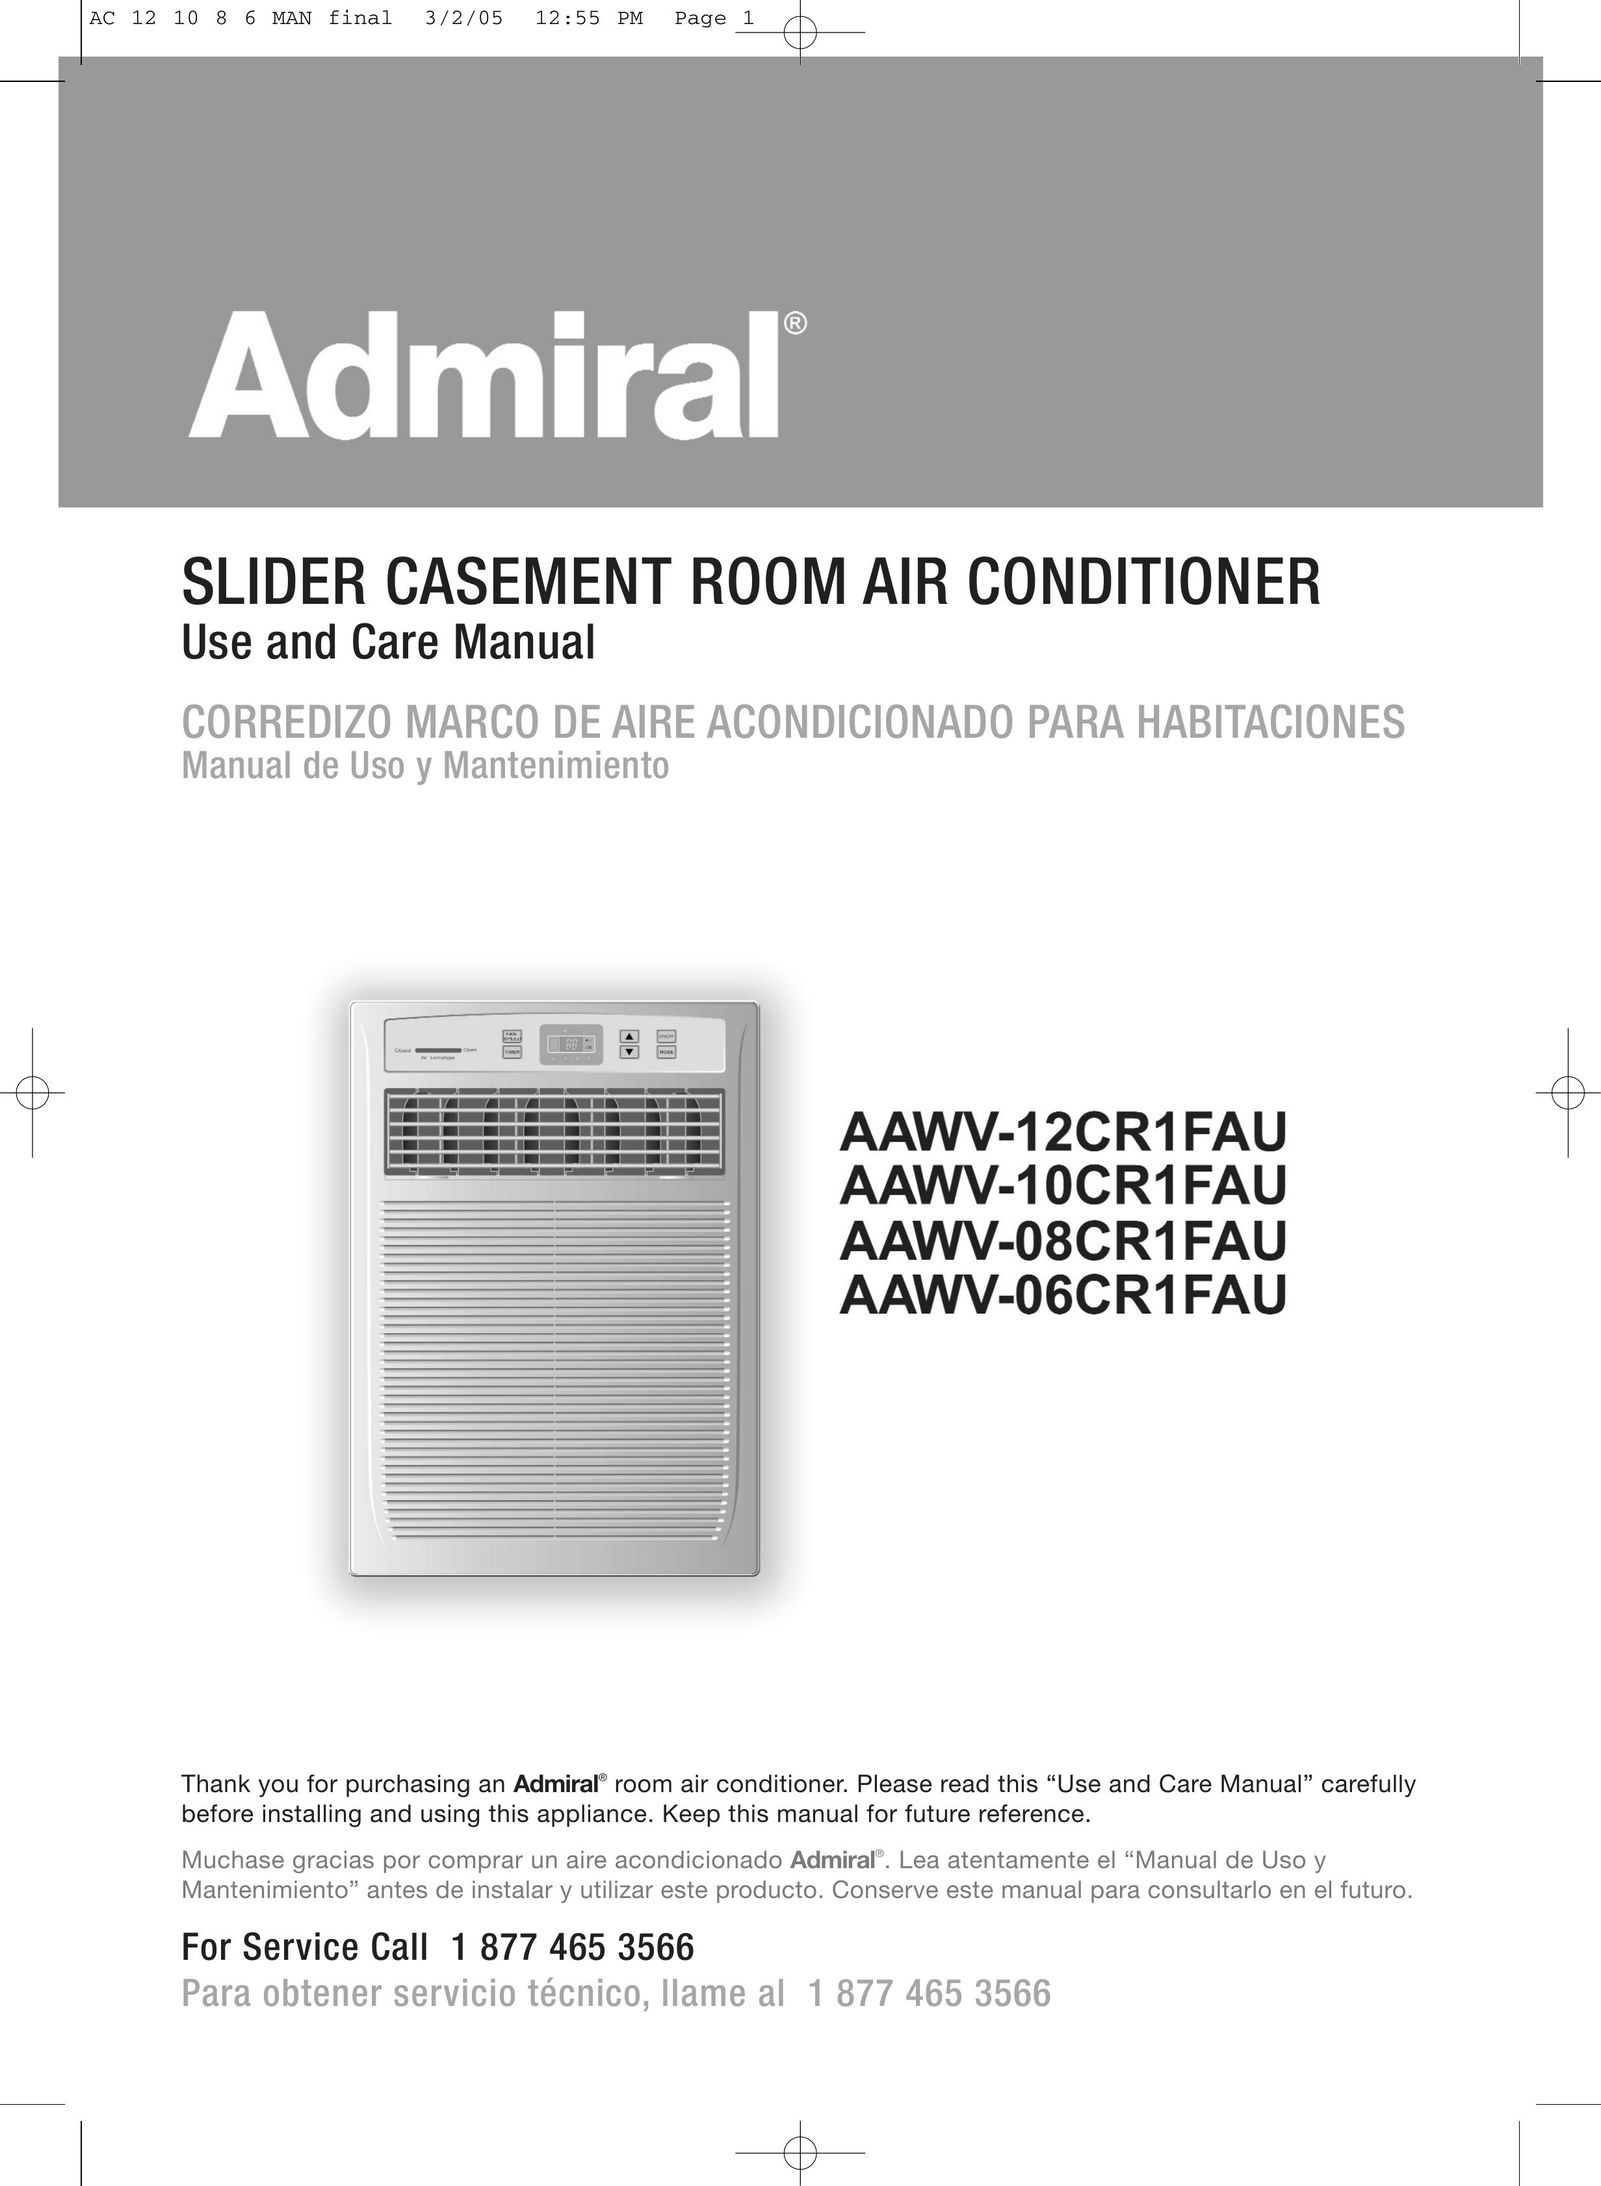 Admiral AAWV-10CR1FAU Air Conditioner User Manual